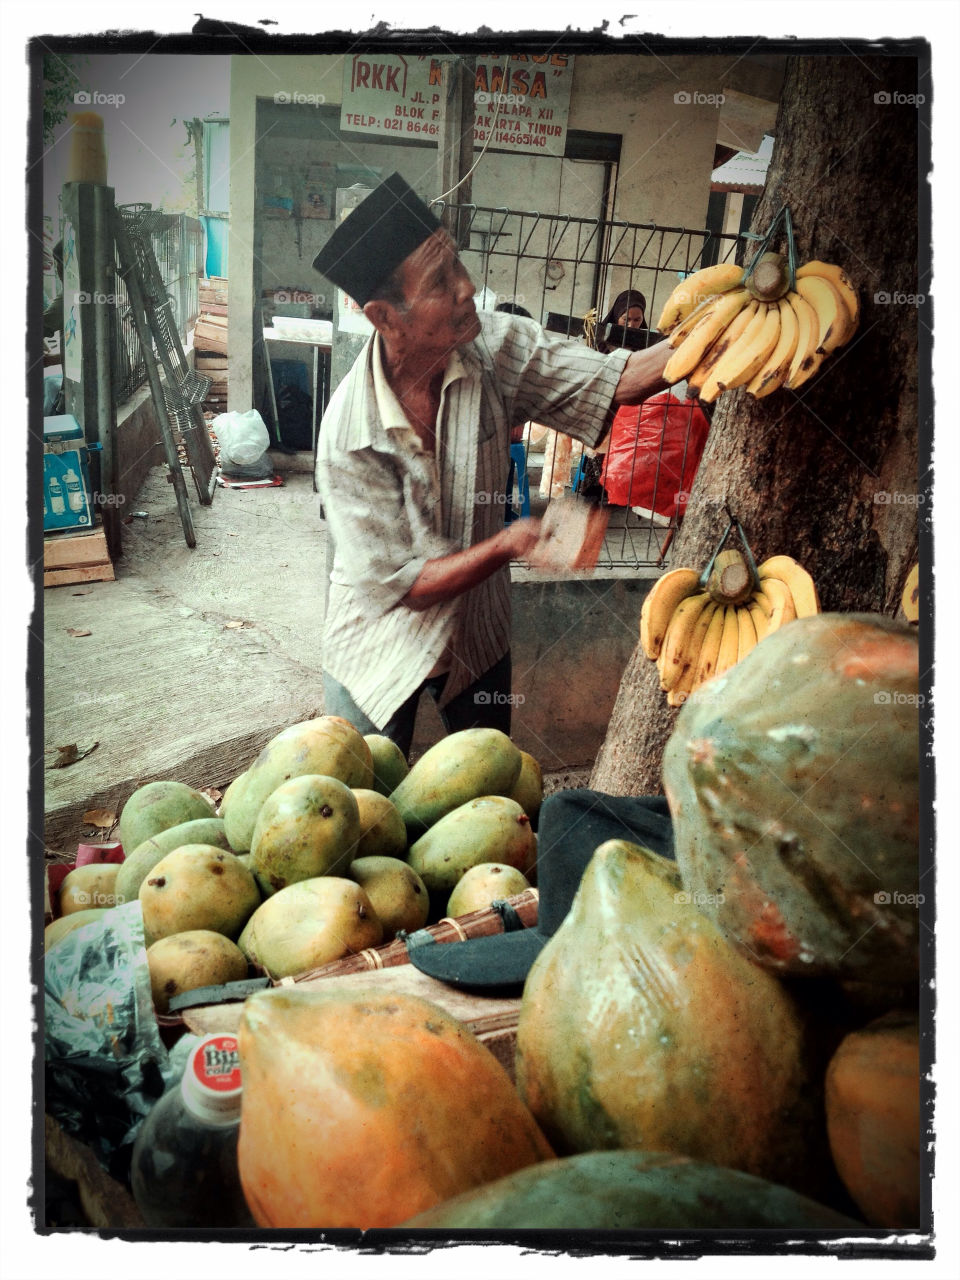 jakarta indonesia dagang buah di usia senja by ubalfas